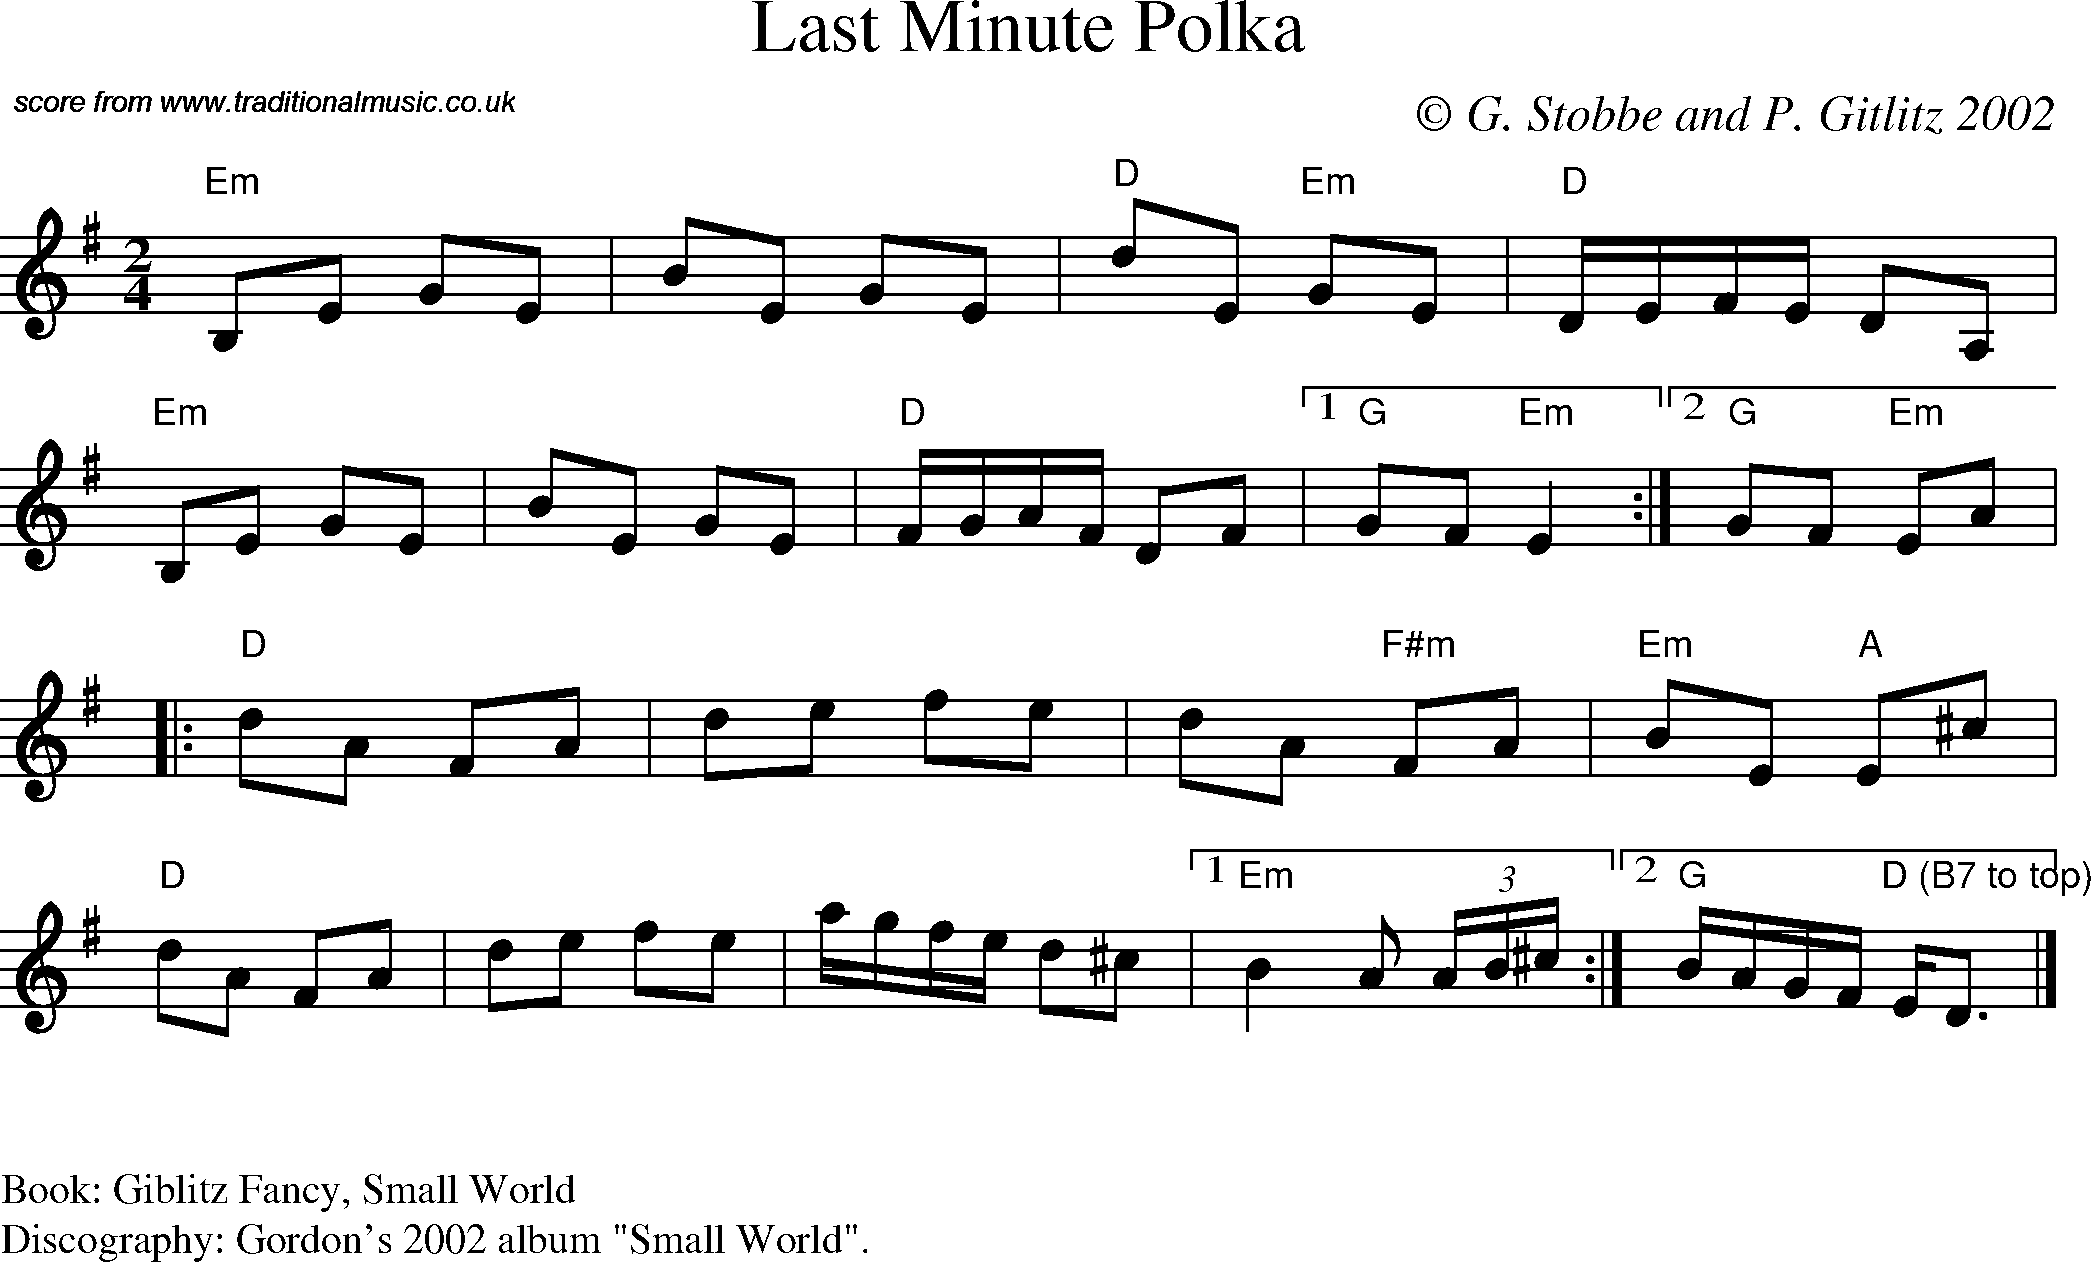 Sheet Music Score for Polka - Last Minute Polka